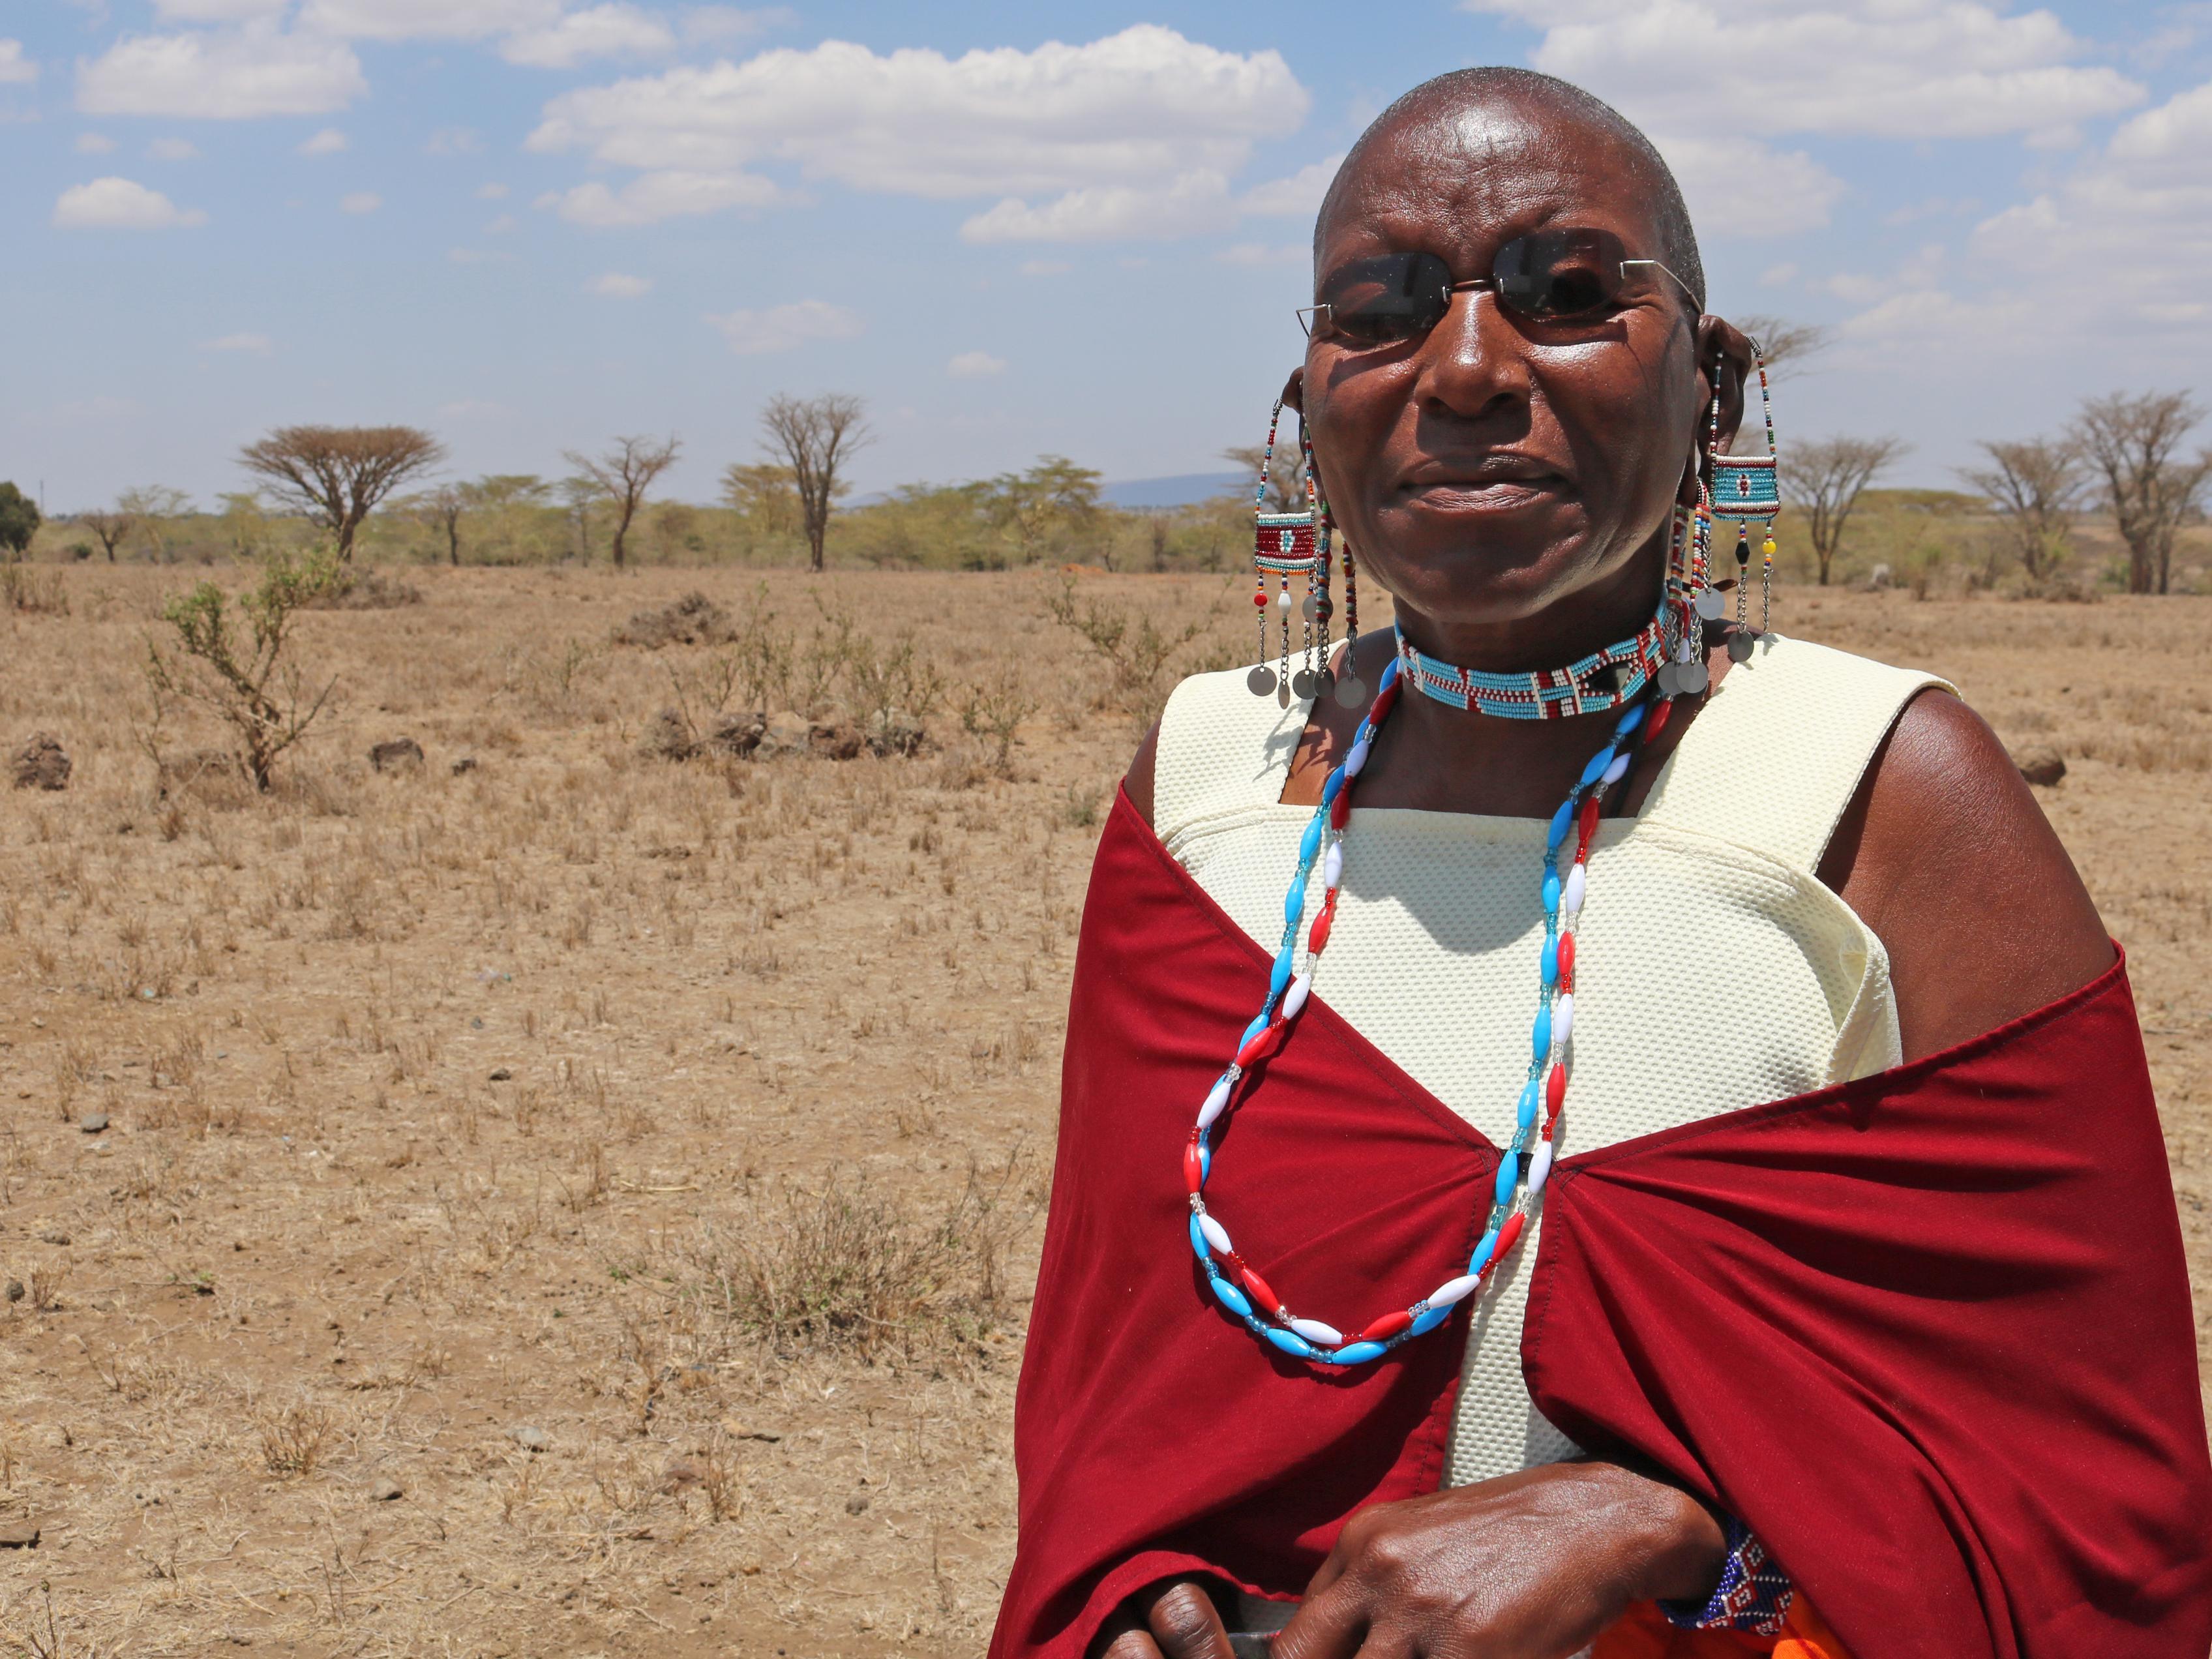 Indigenous woman in Kenya